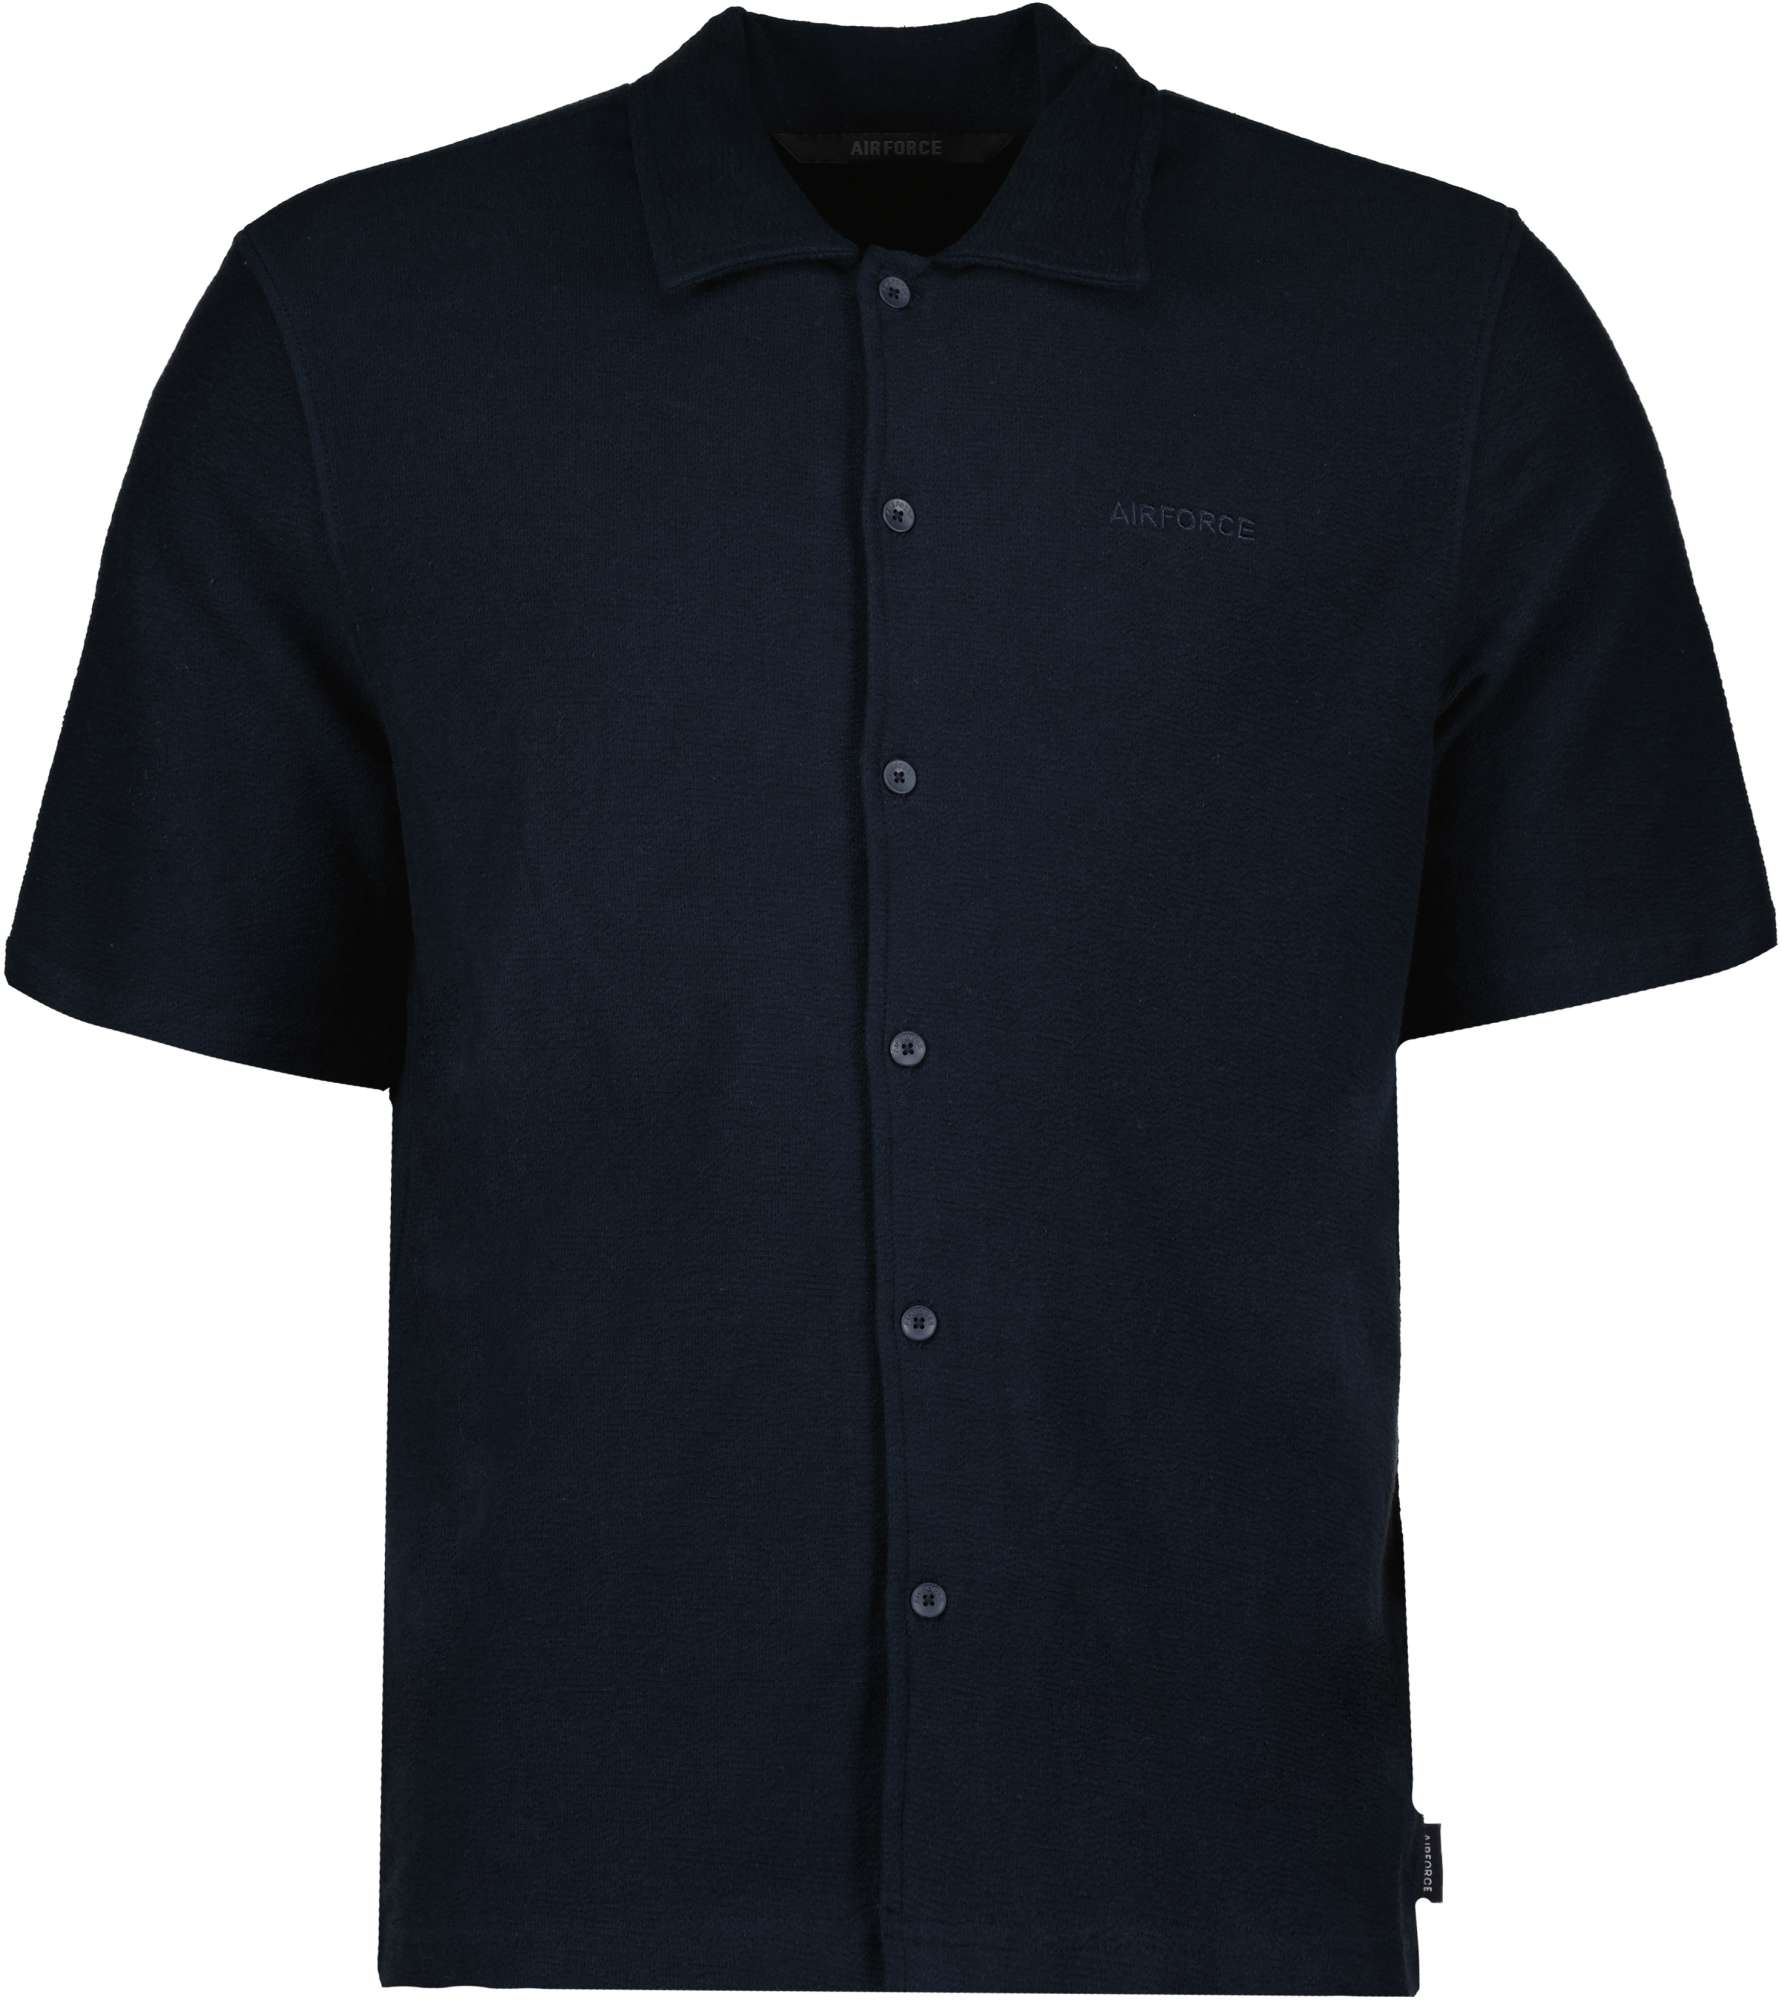 Afbeelding van Airforce Woven short sleeve shirt dark navy blue